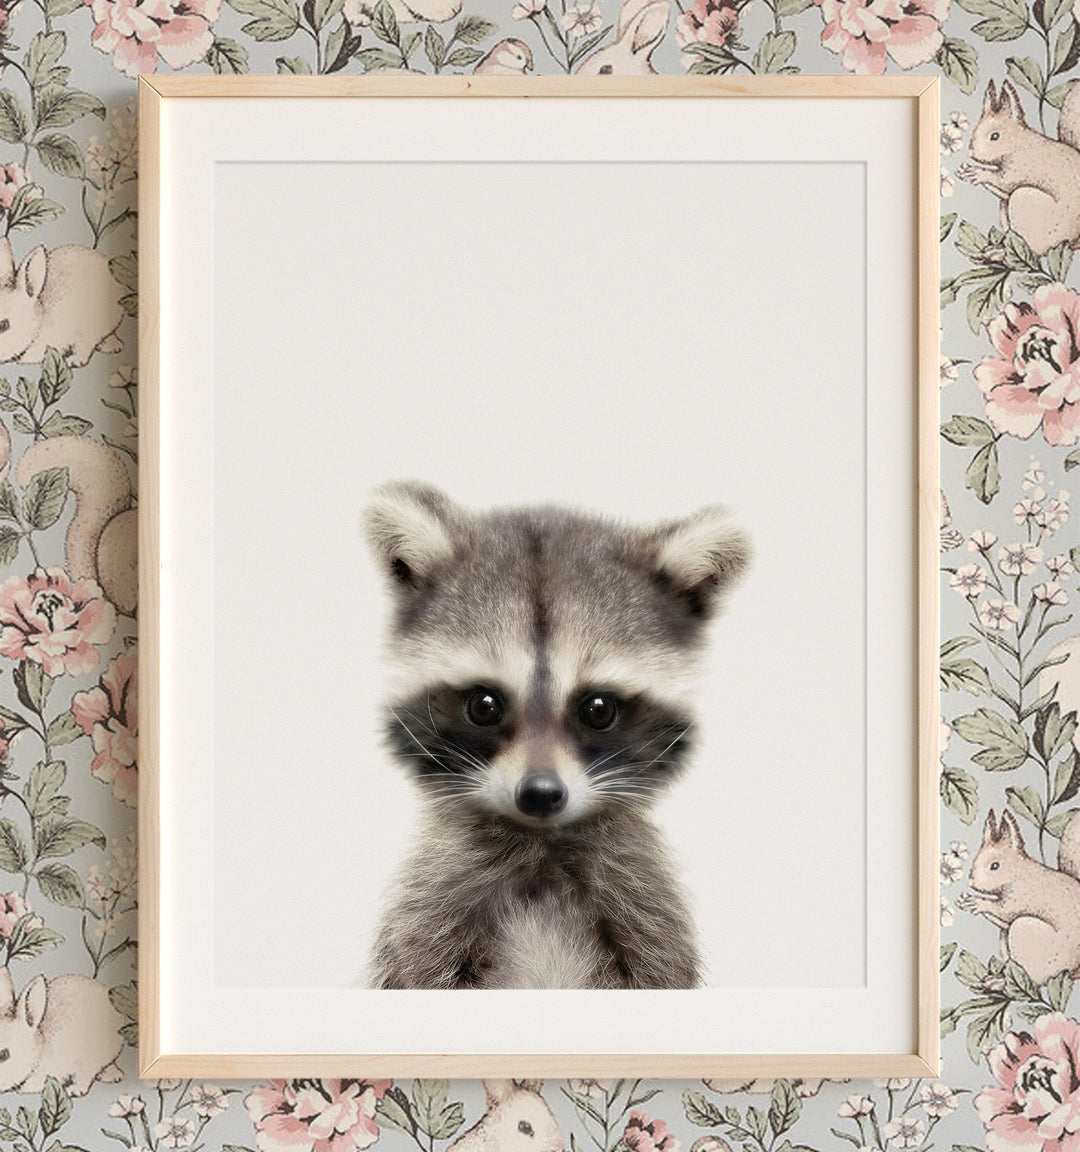 Portrait of a baby raccoon - original nursery animal artwork from The Crown Prints